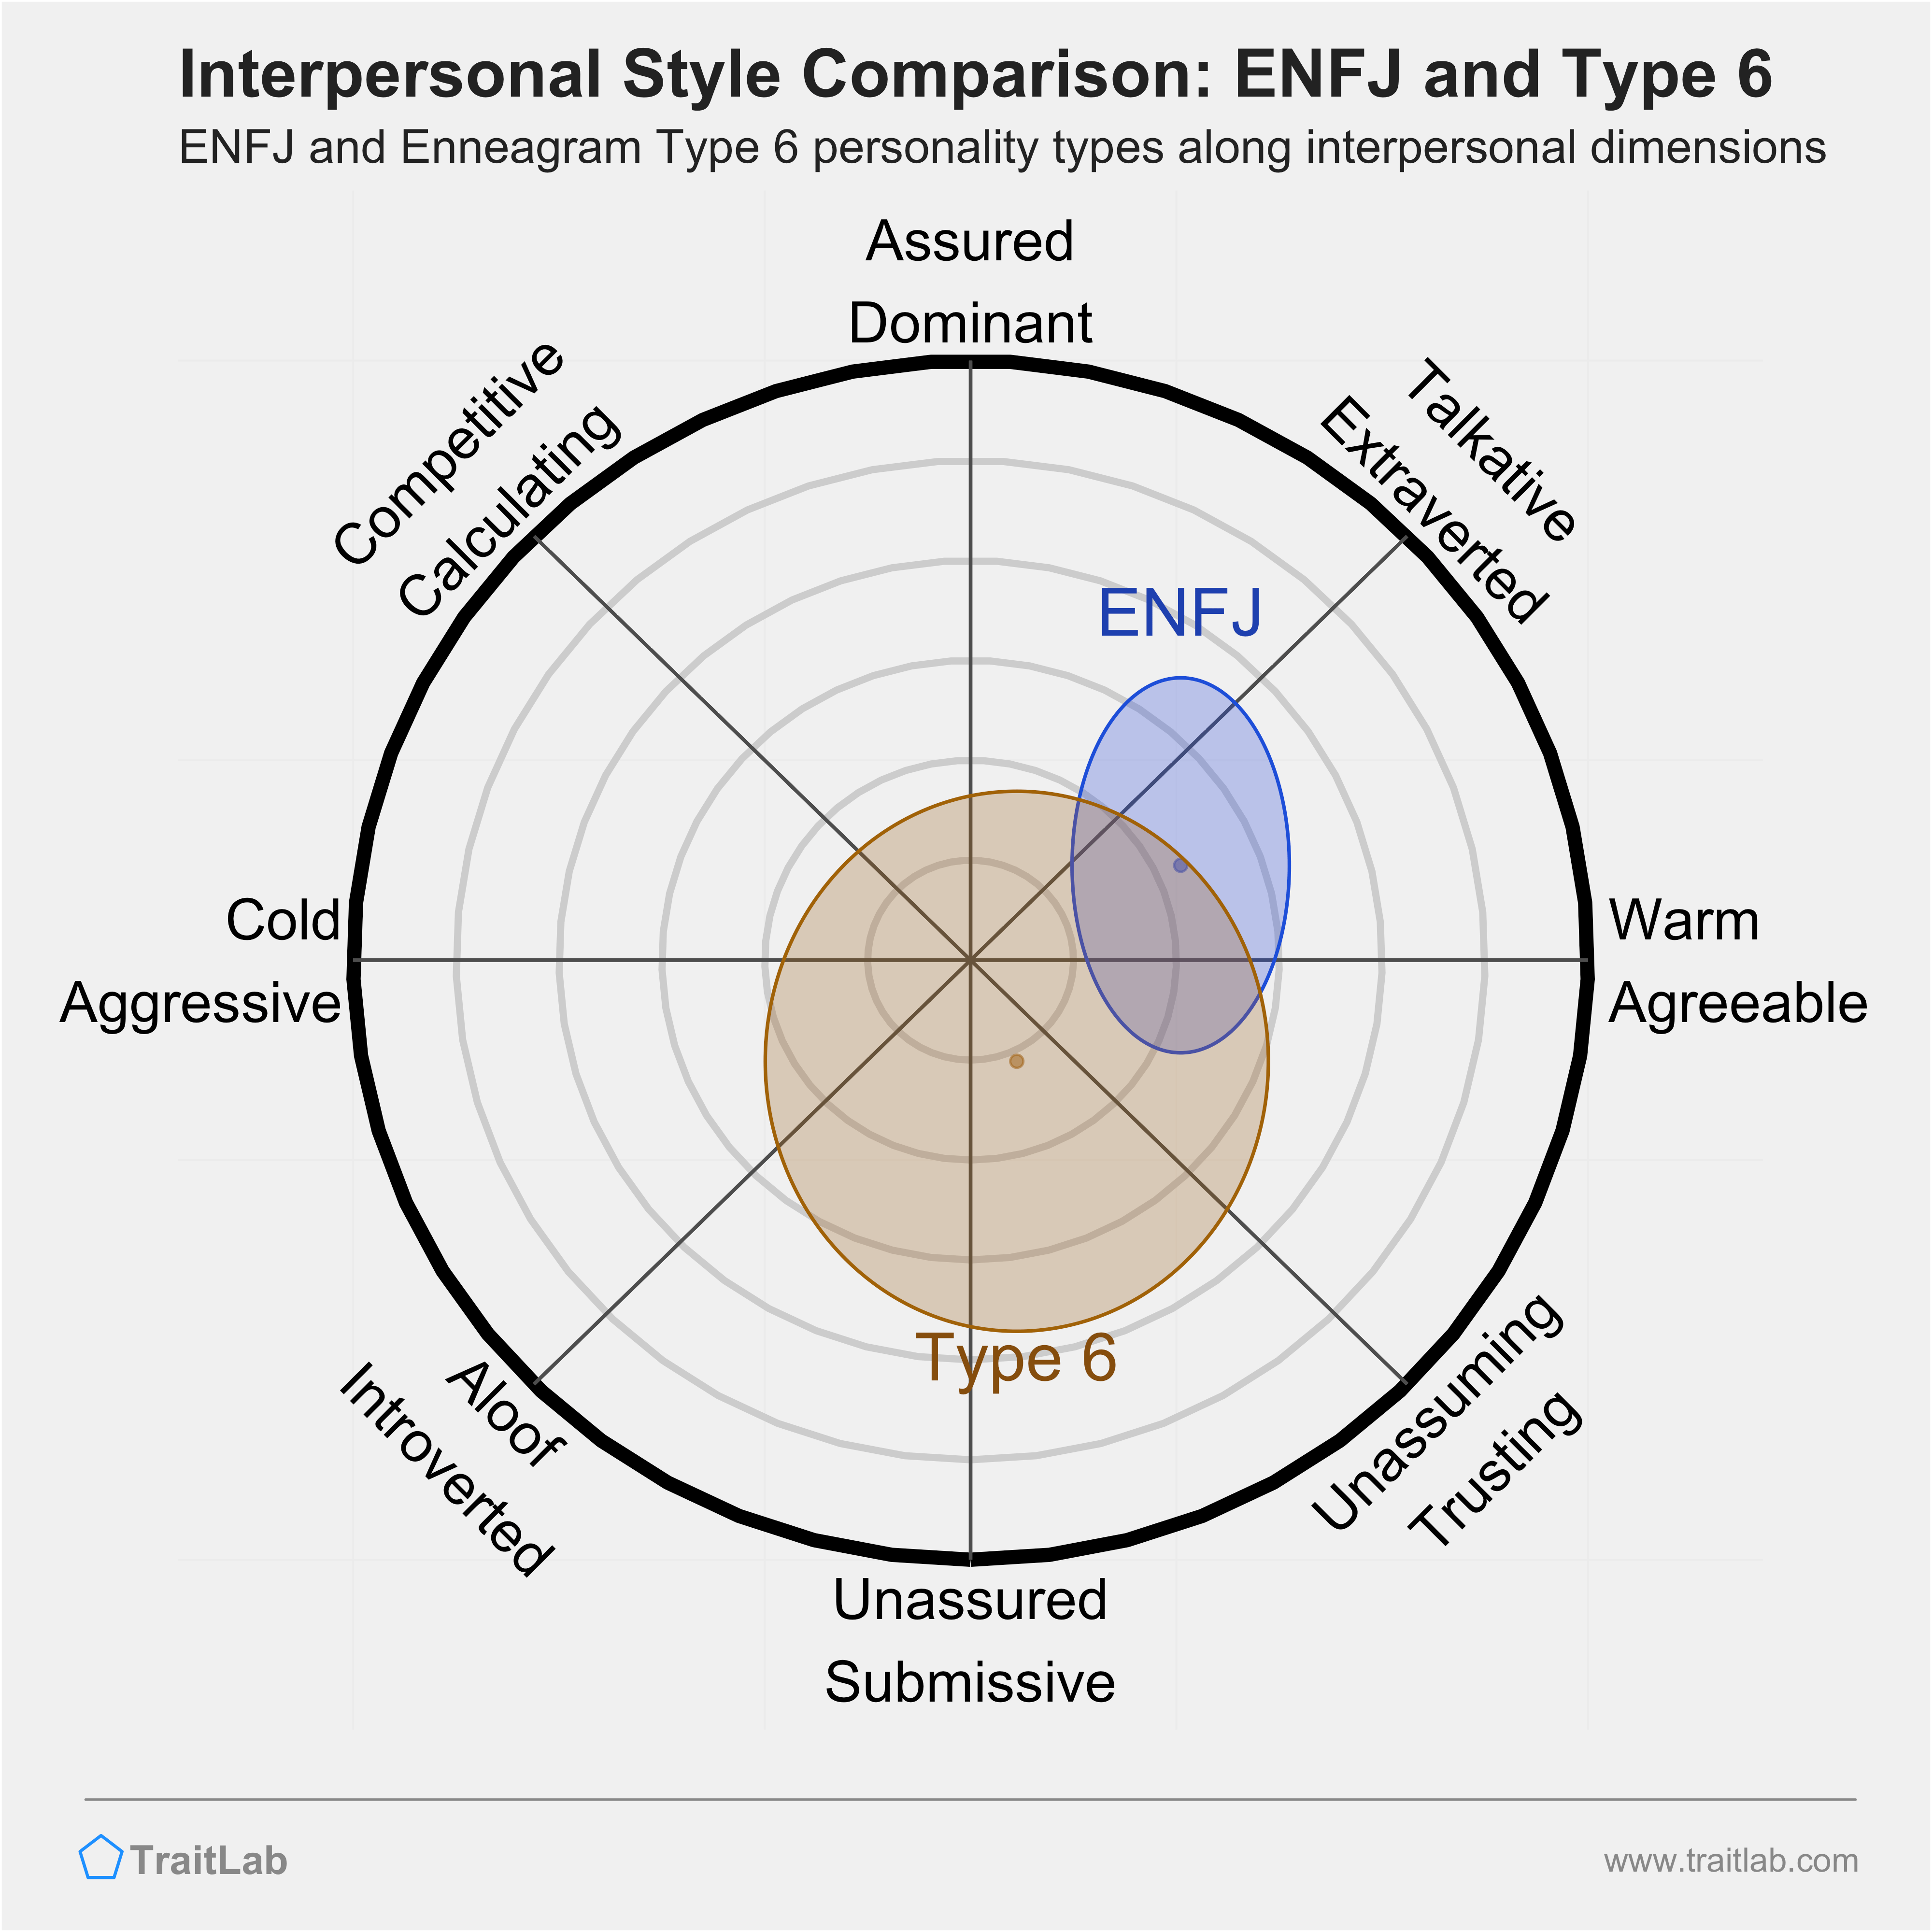 Enneagram ENFJ and Type 6 comparison across interpersonal dimensions